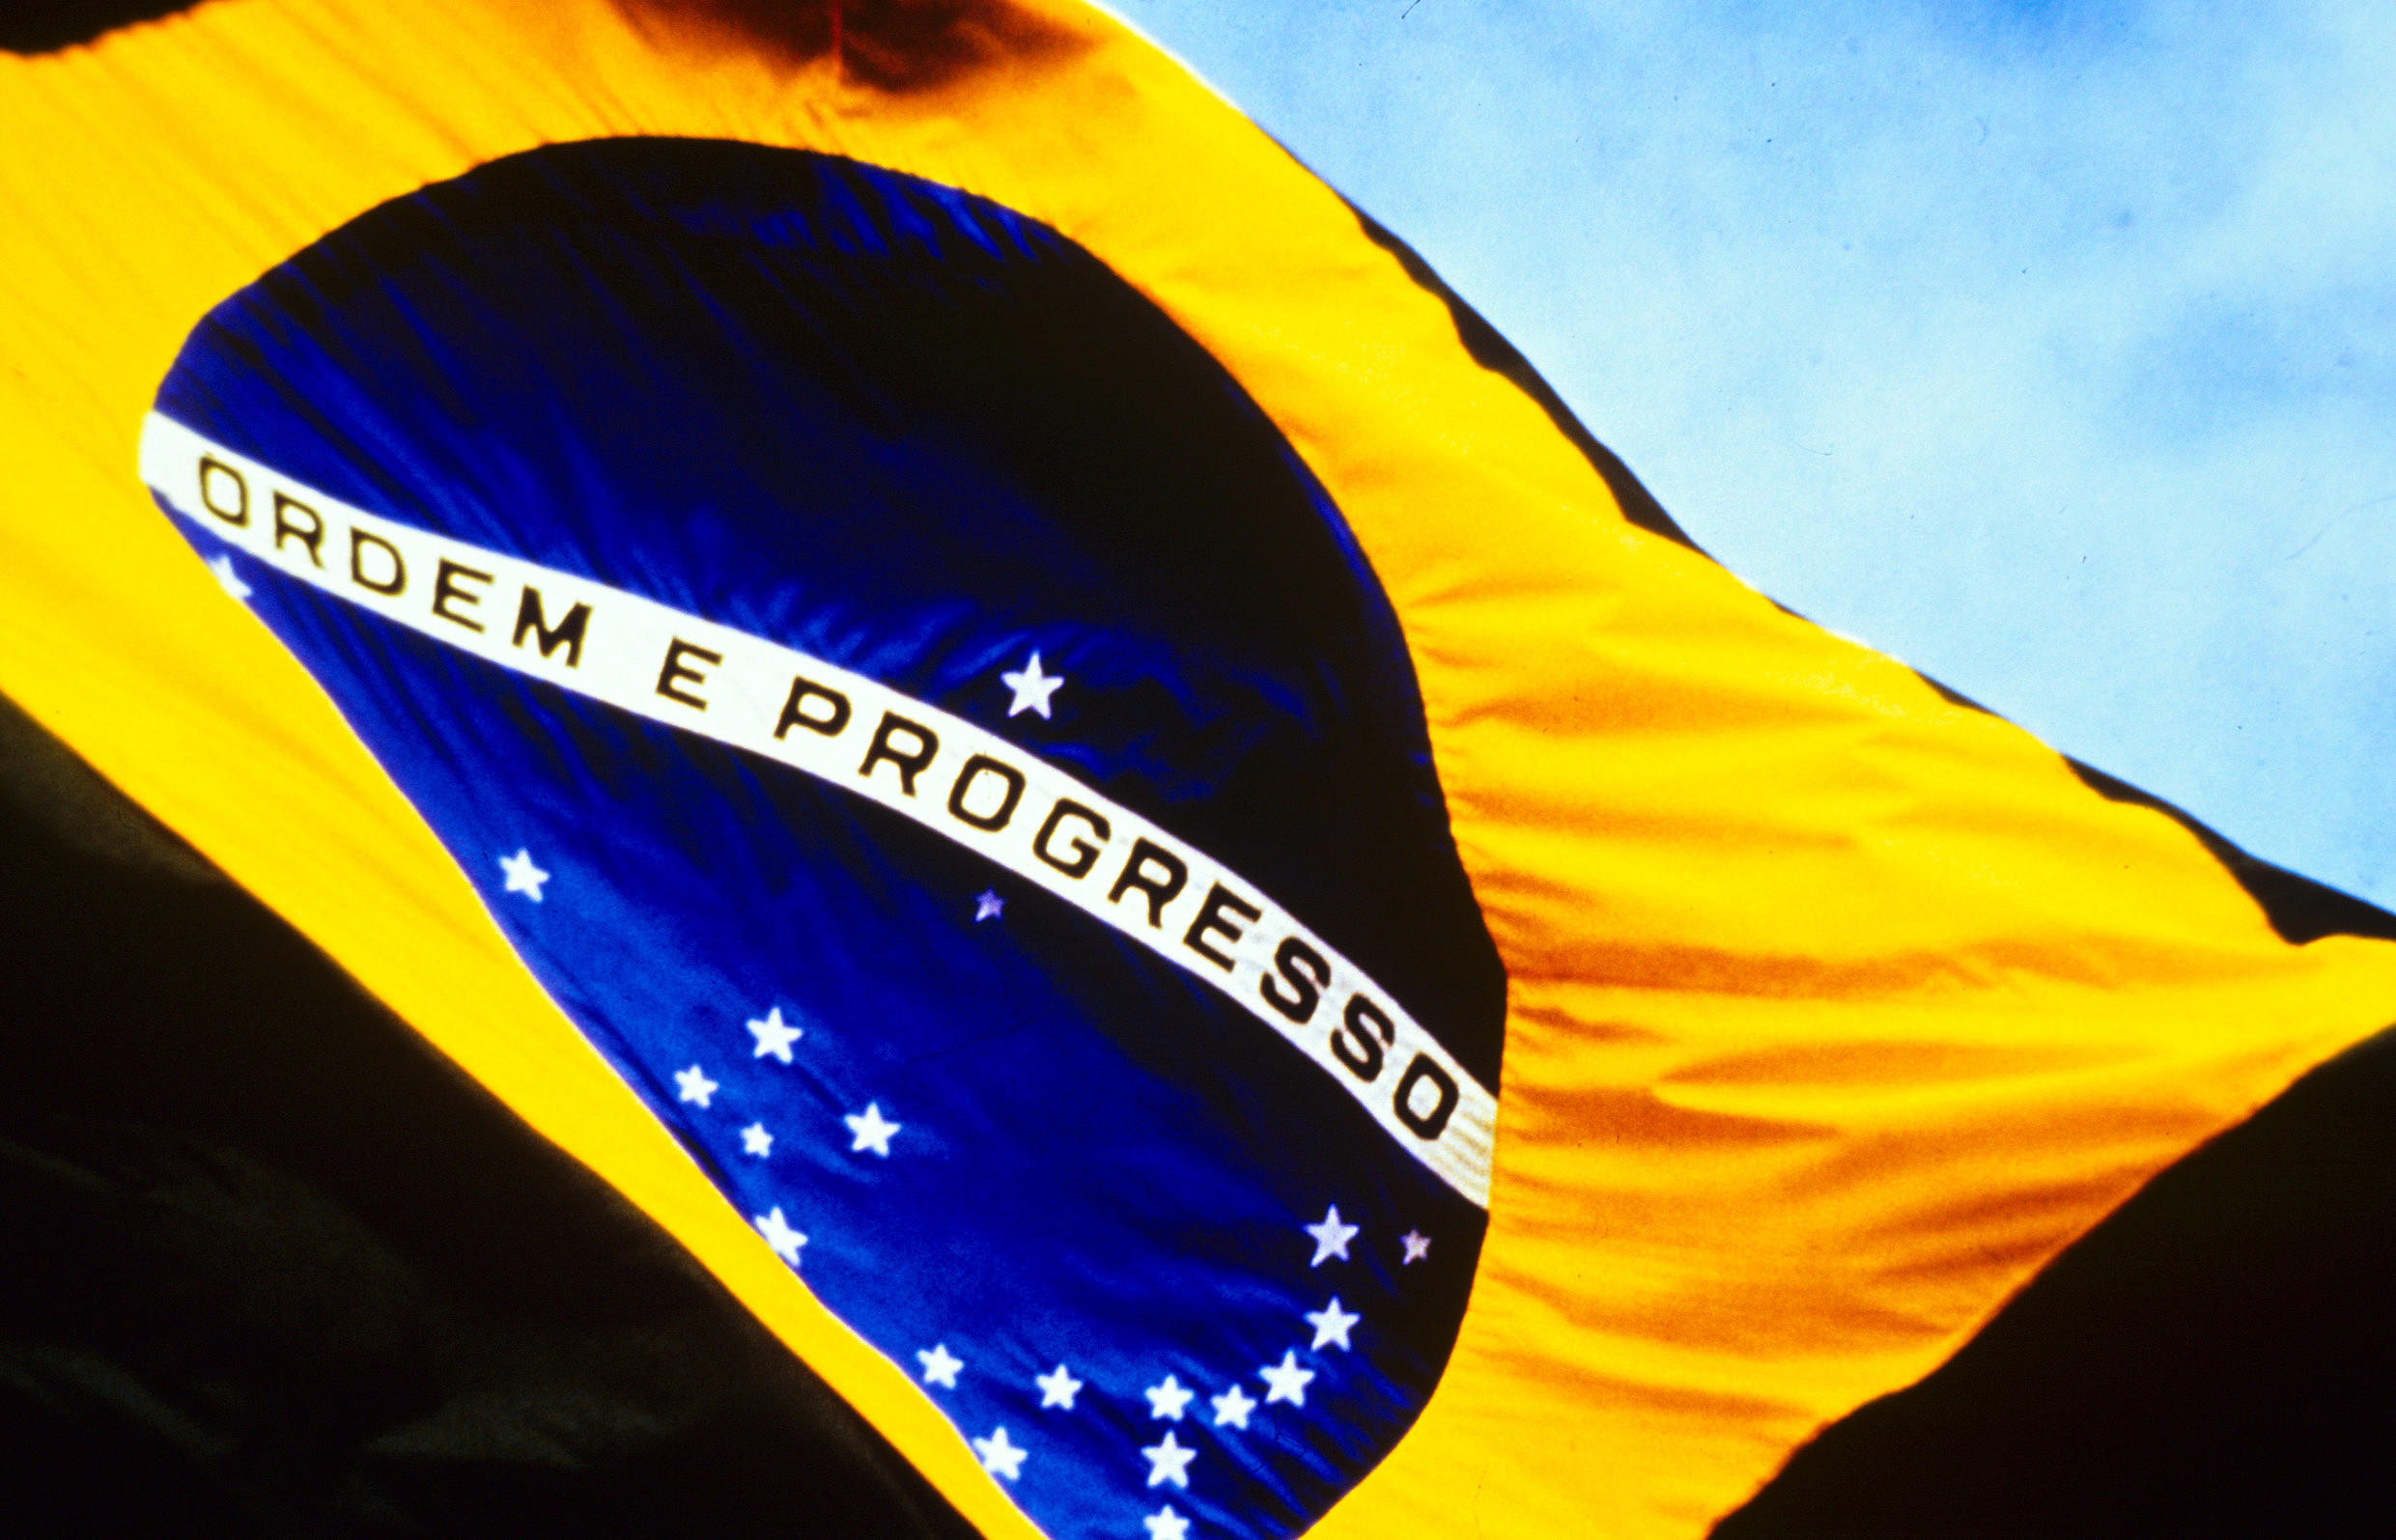 Fundo Da Bandeira Do Brasil Hd Grátis, Brasil, Bandeira, Fundo Do Brasil  Imagem de plano de fundo para download gratuito